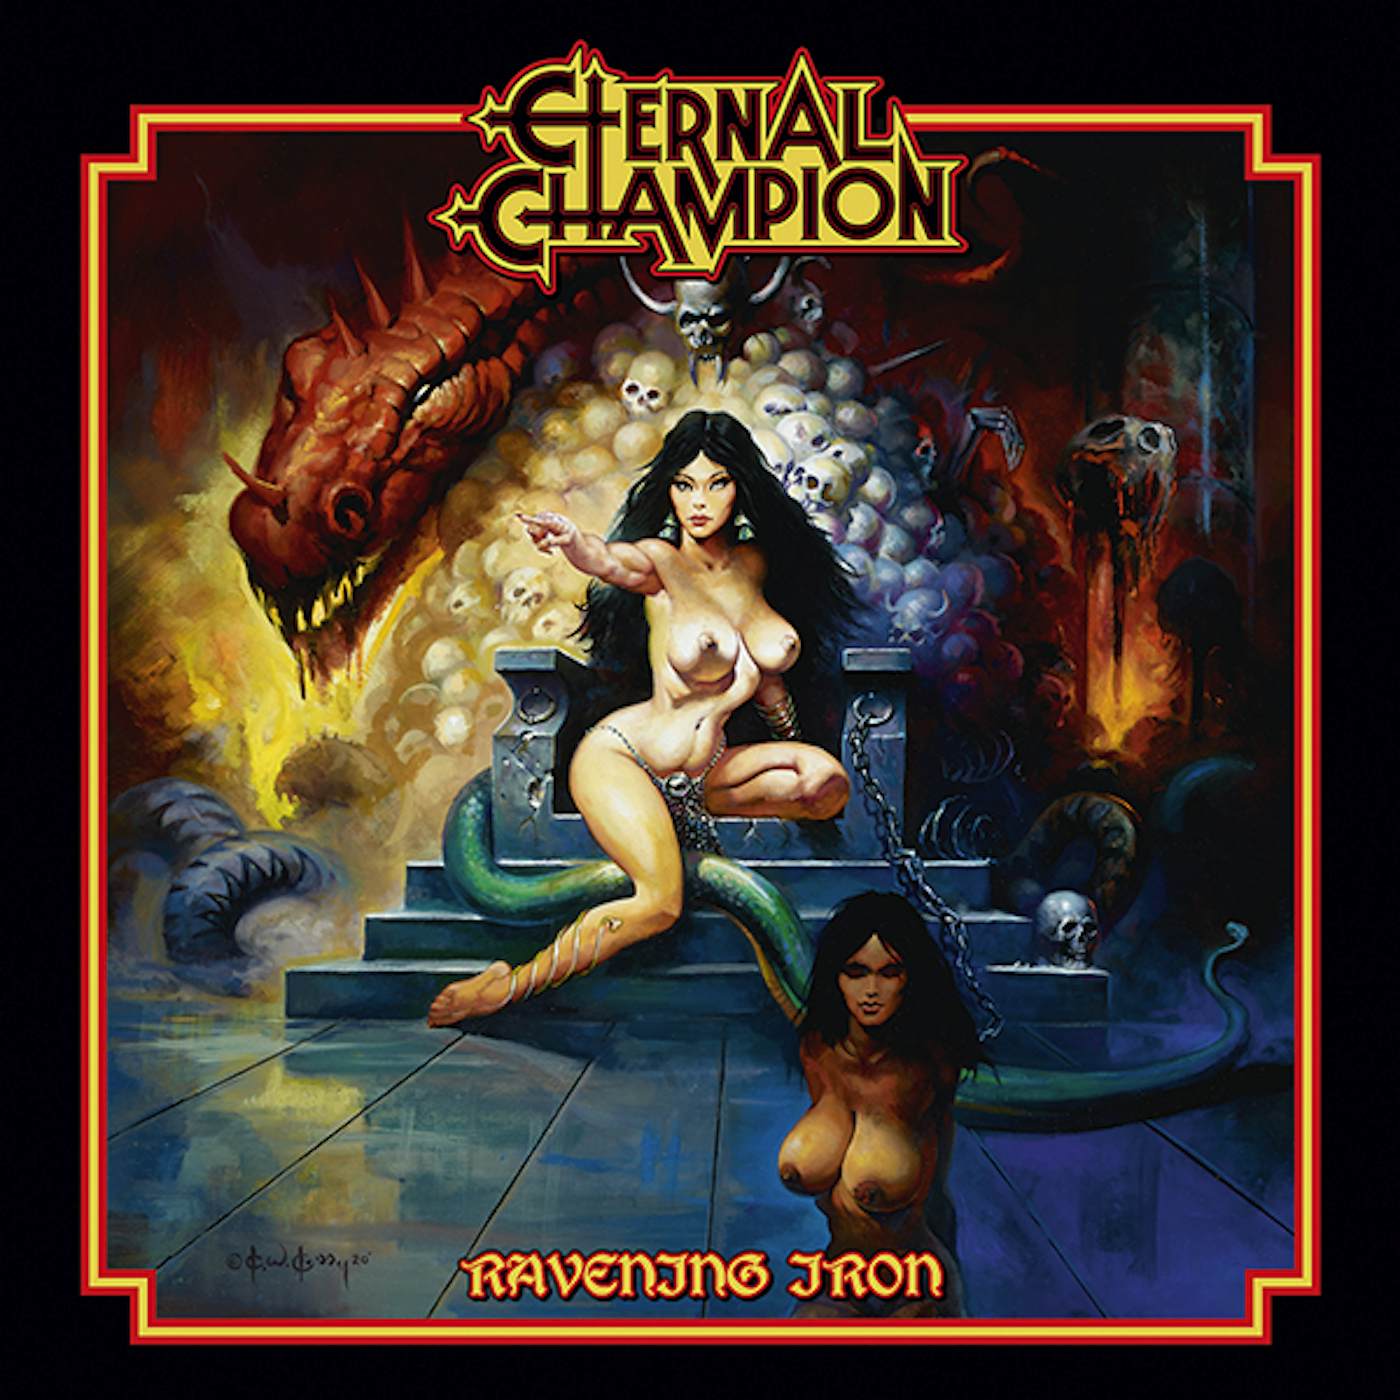 Eternal Champion RAVENING IRON Vinyl Record